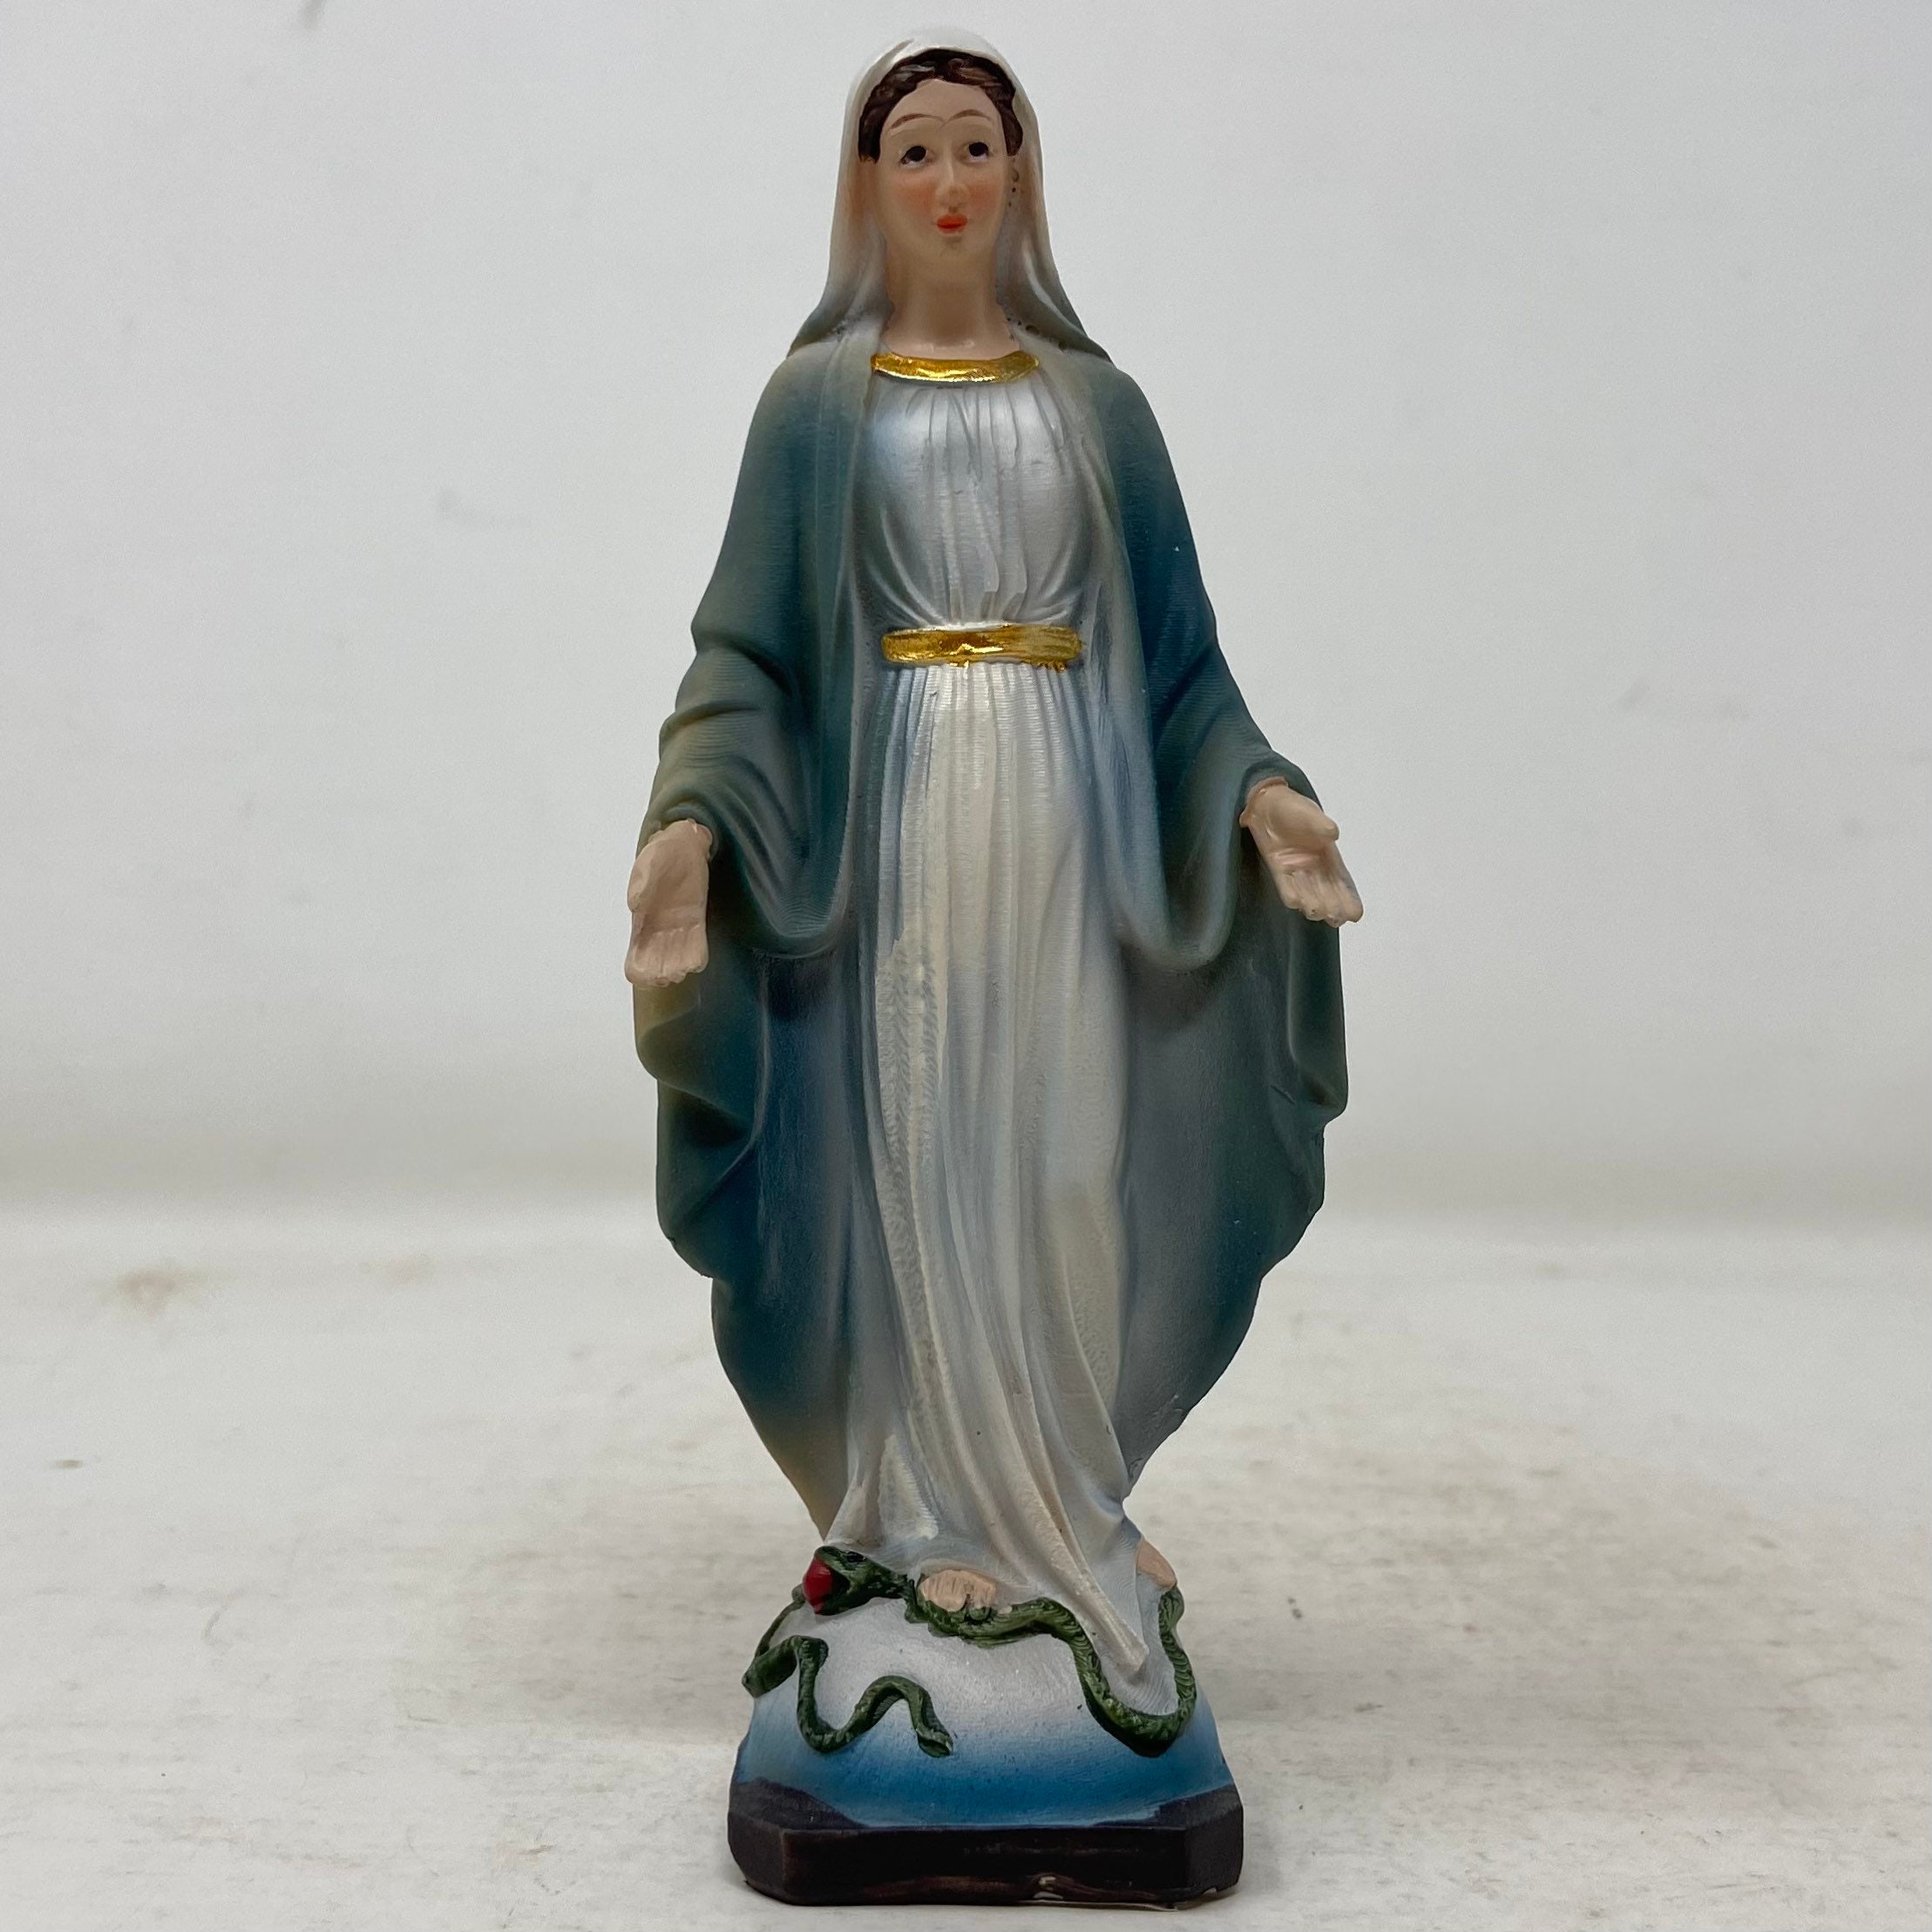 STATUE Virgen La Milagrosa # 20061 BRAND NEW